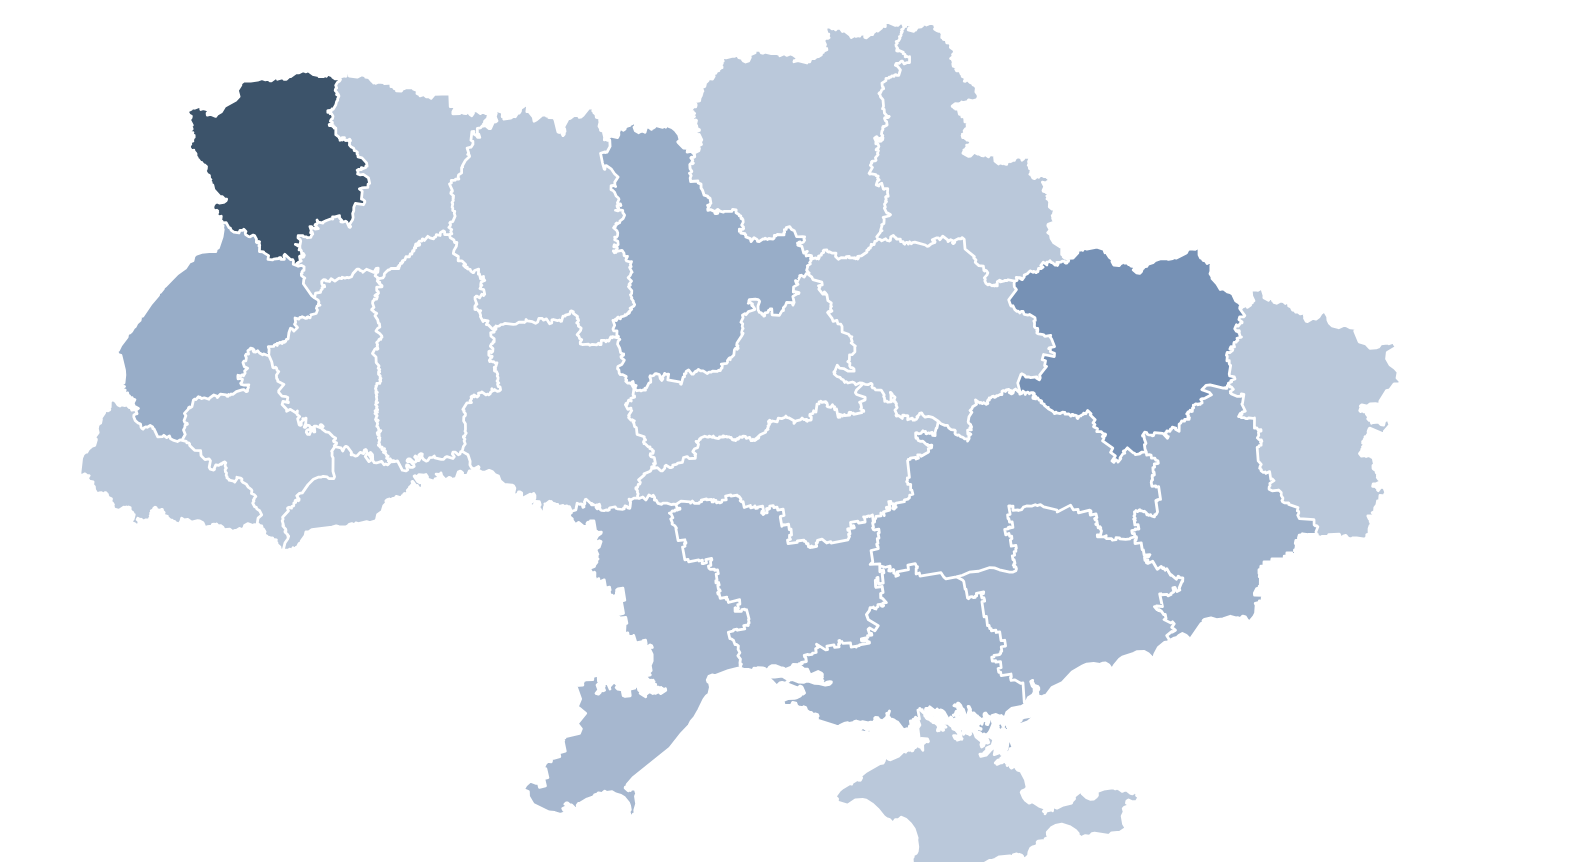 An interactive map of Ukraine on the Svidok's website.